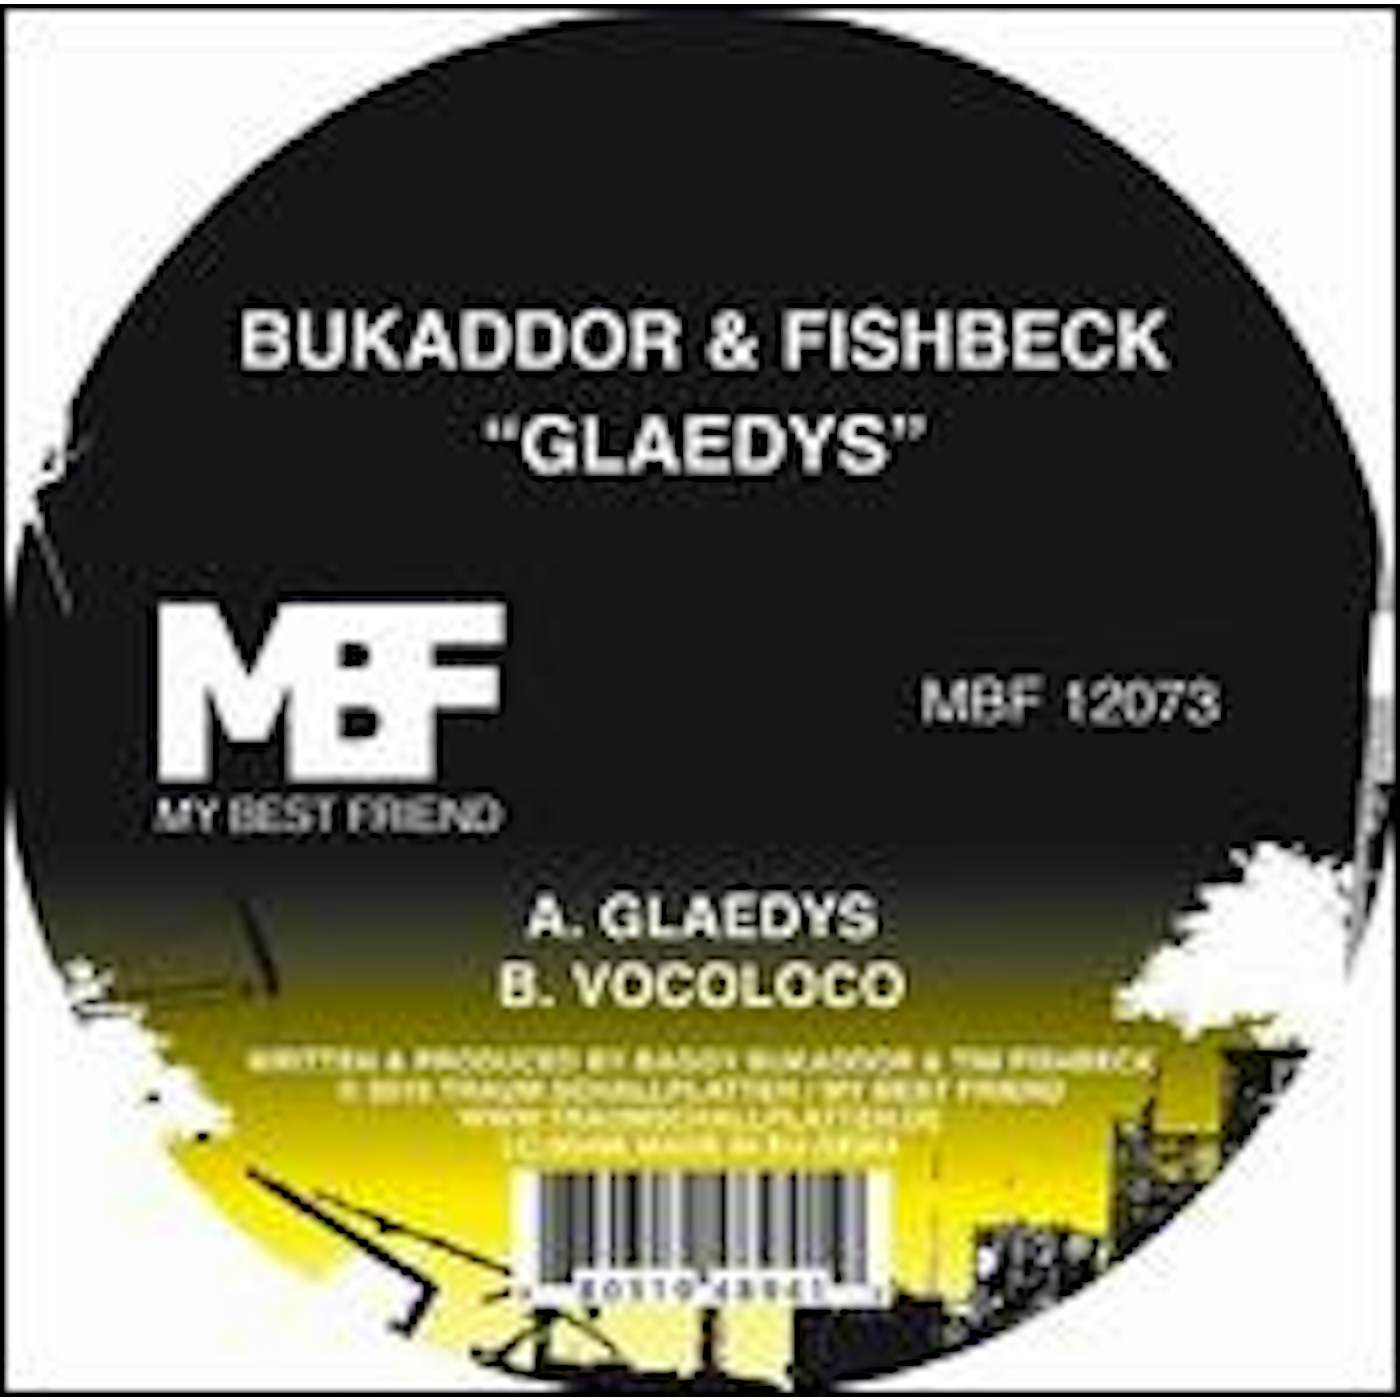 Bukaddor & Fishbeck Glaedys Vinyl Record